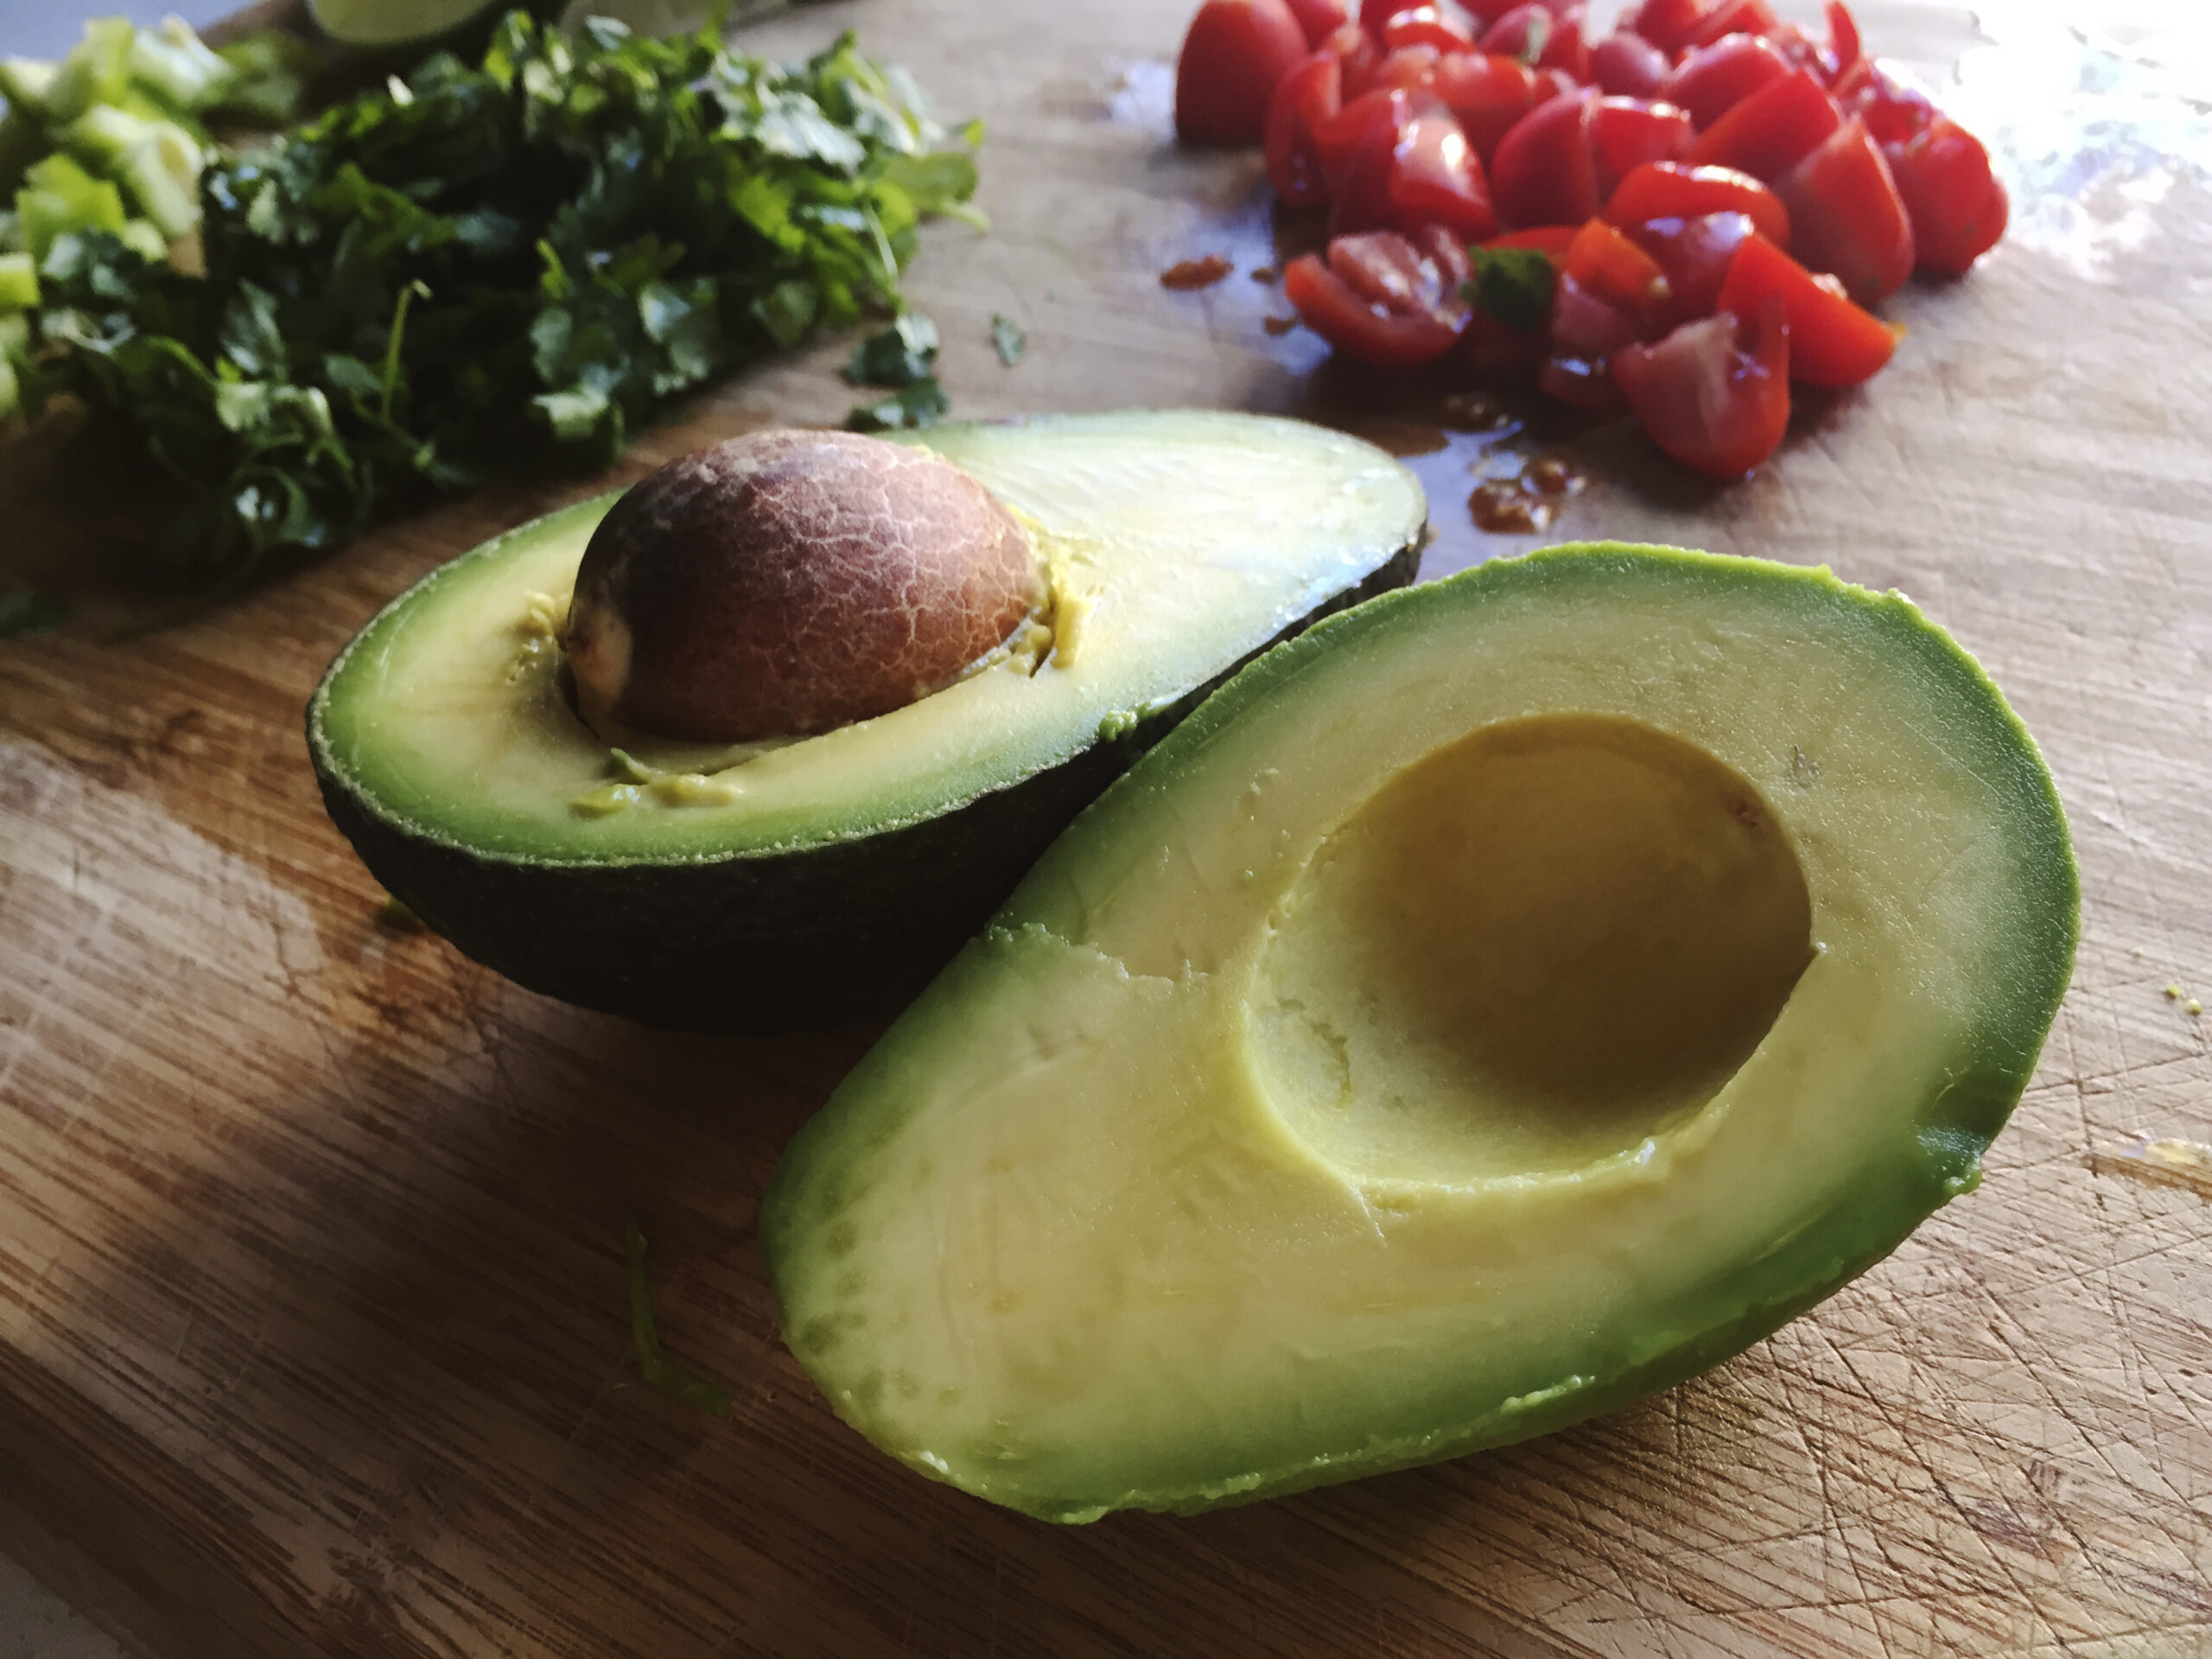 How to choose an avocado